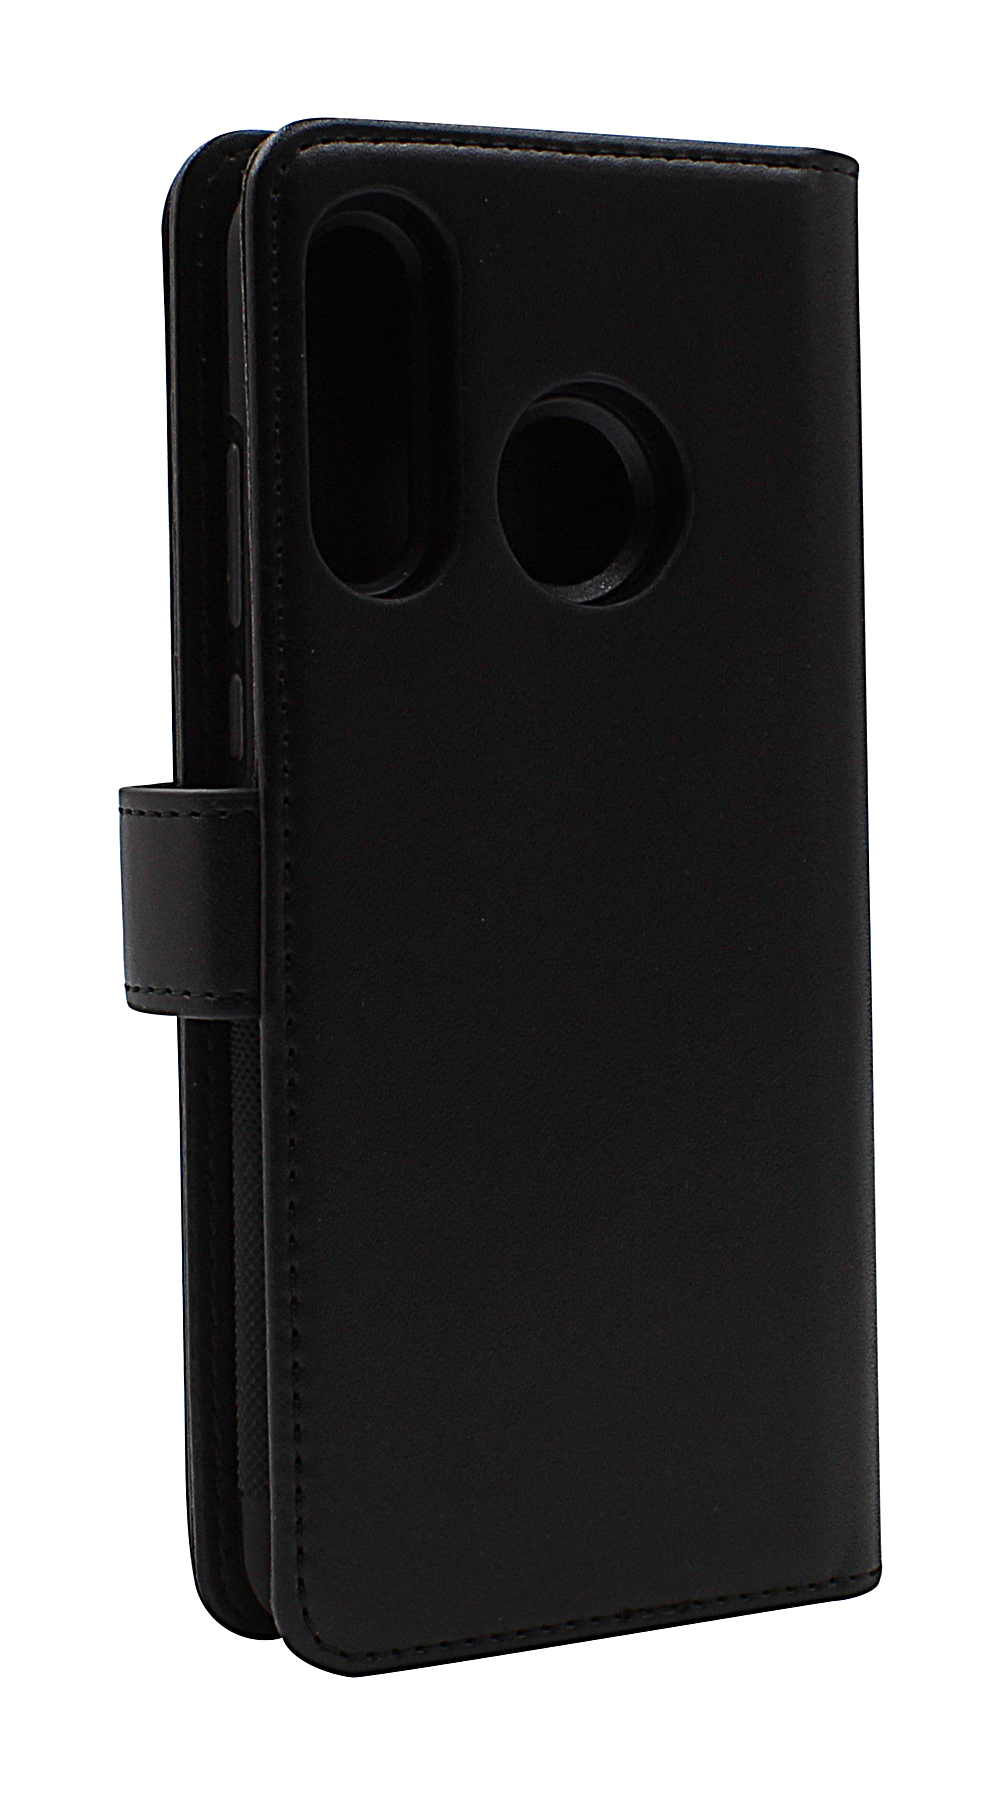 Skimblocker XL Magnet Wallet Huawei P30 Lite